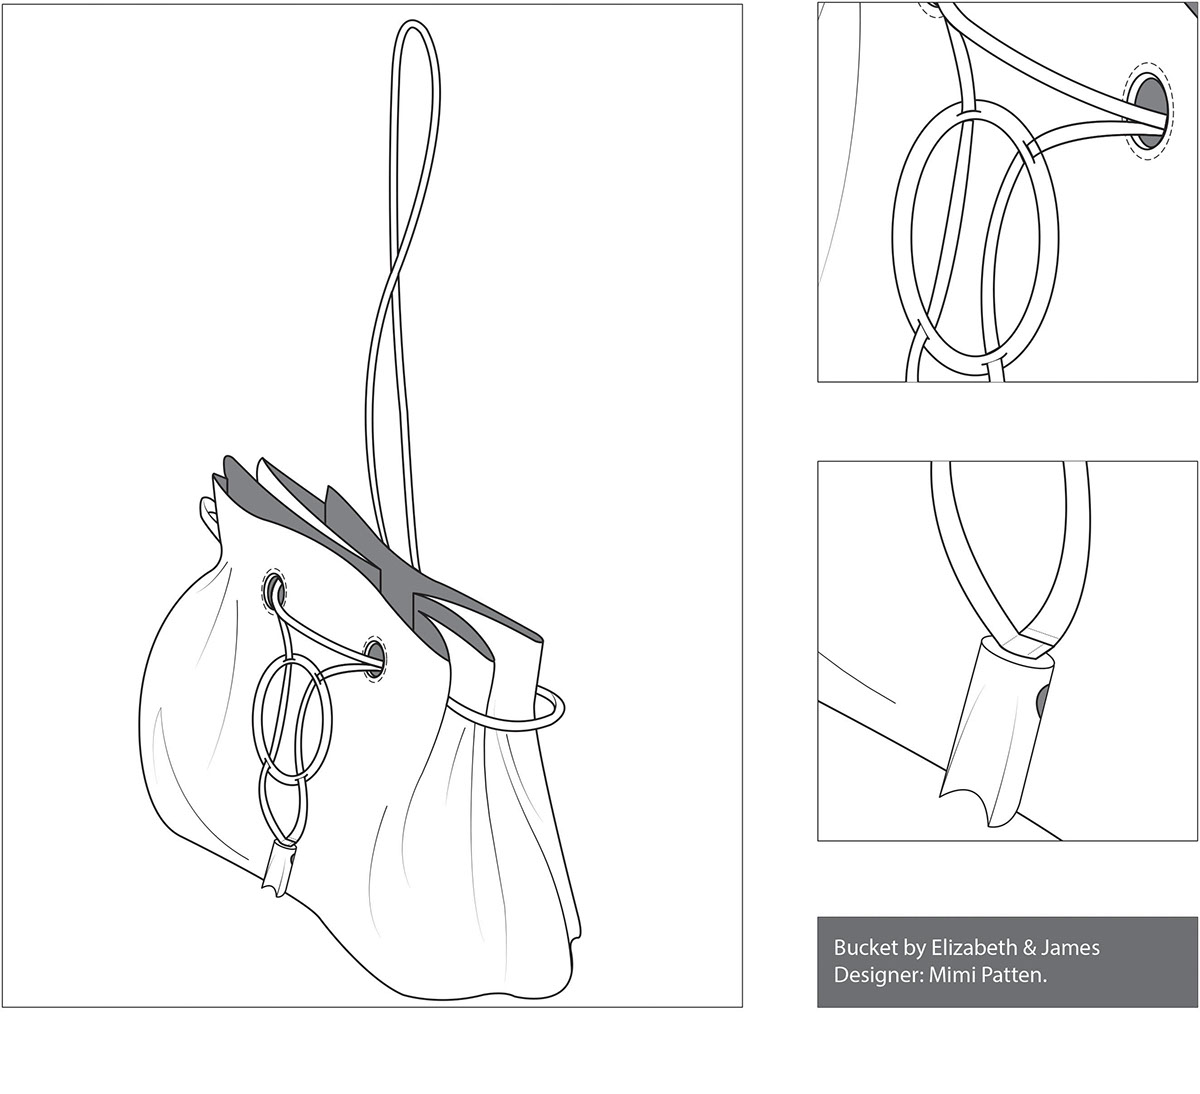 accesories accesory design Handbag Design handbags ss16